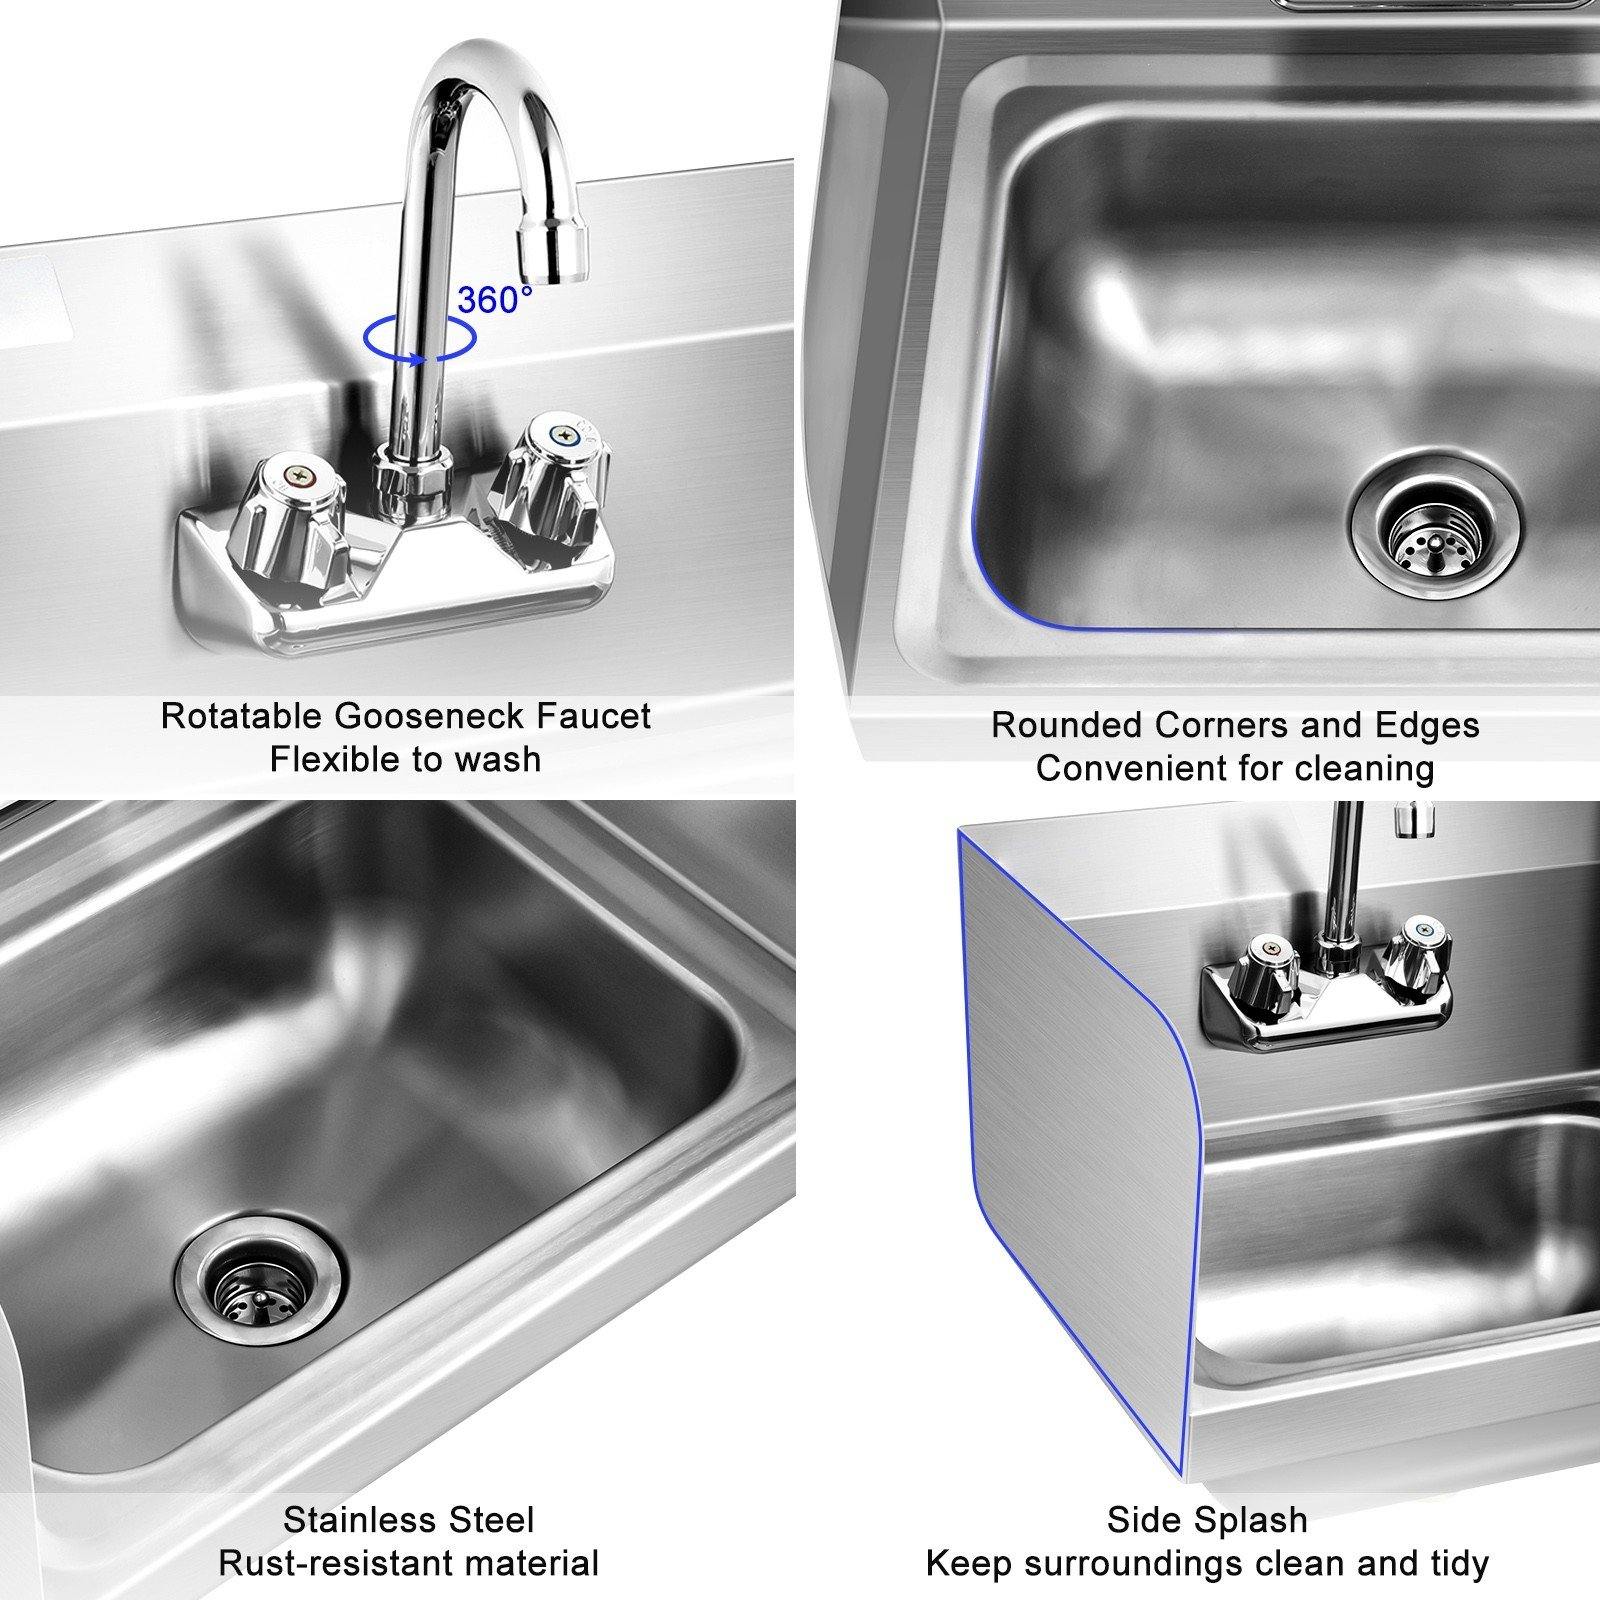 Giantex Stainless Steel Hand Washing Sink, Wall Mount Hand Sink w/ Faucet, 17" x 15" - Giantexus